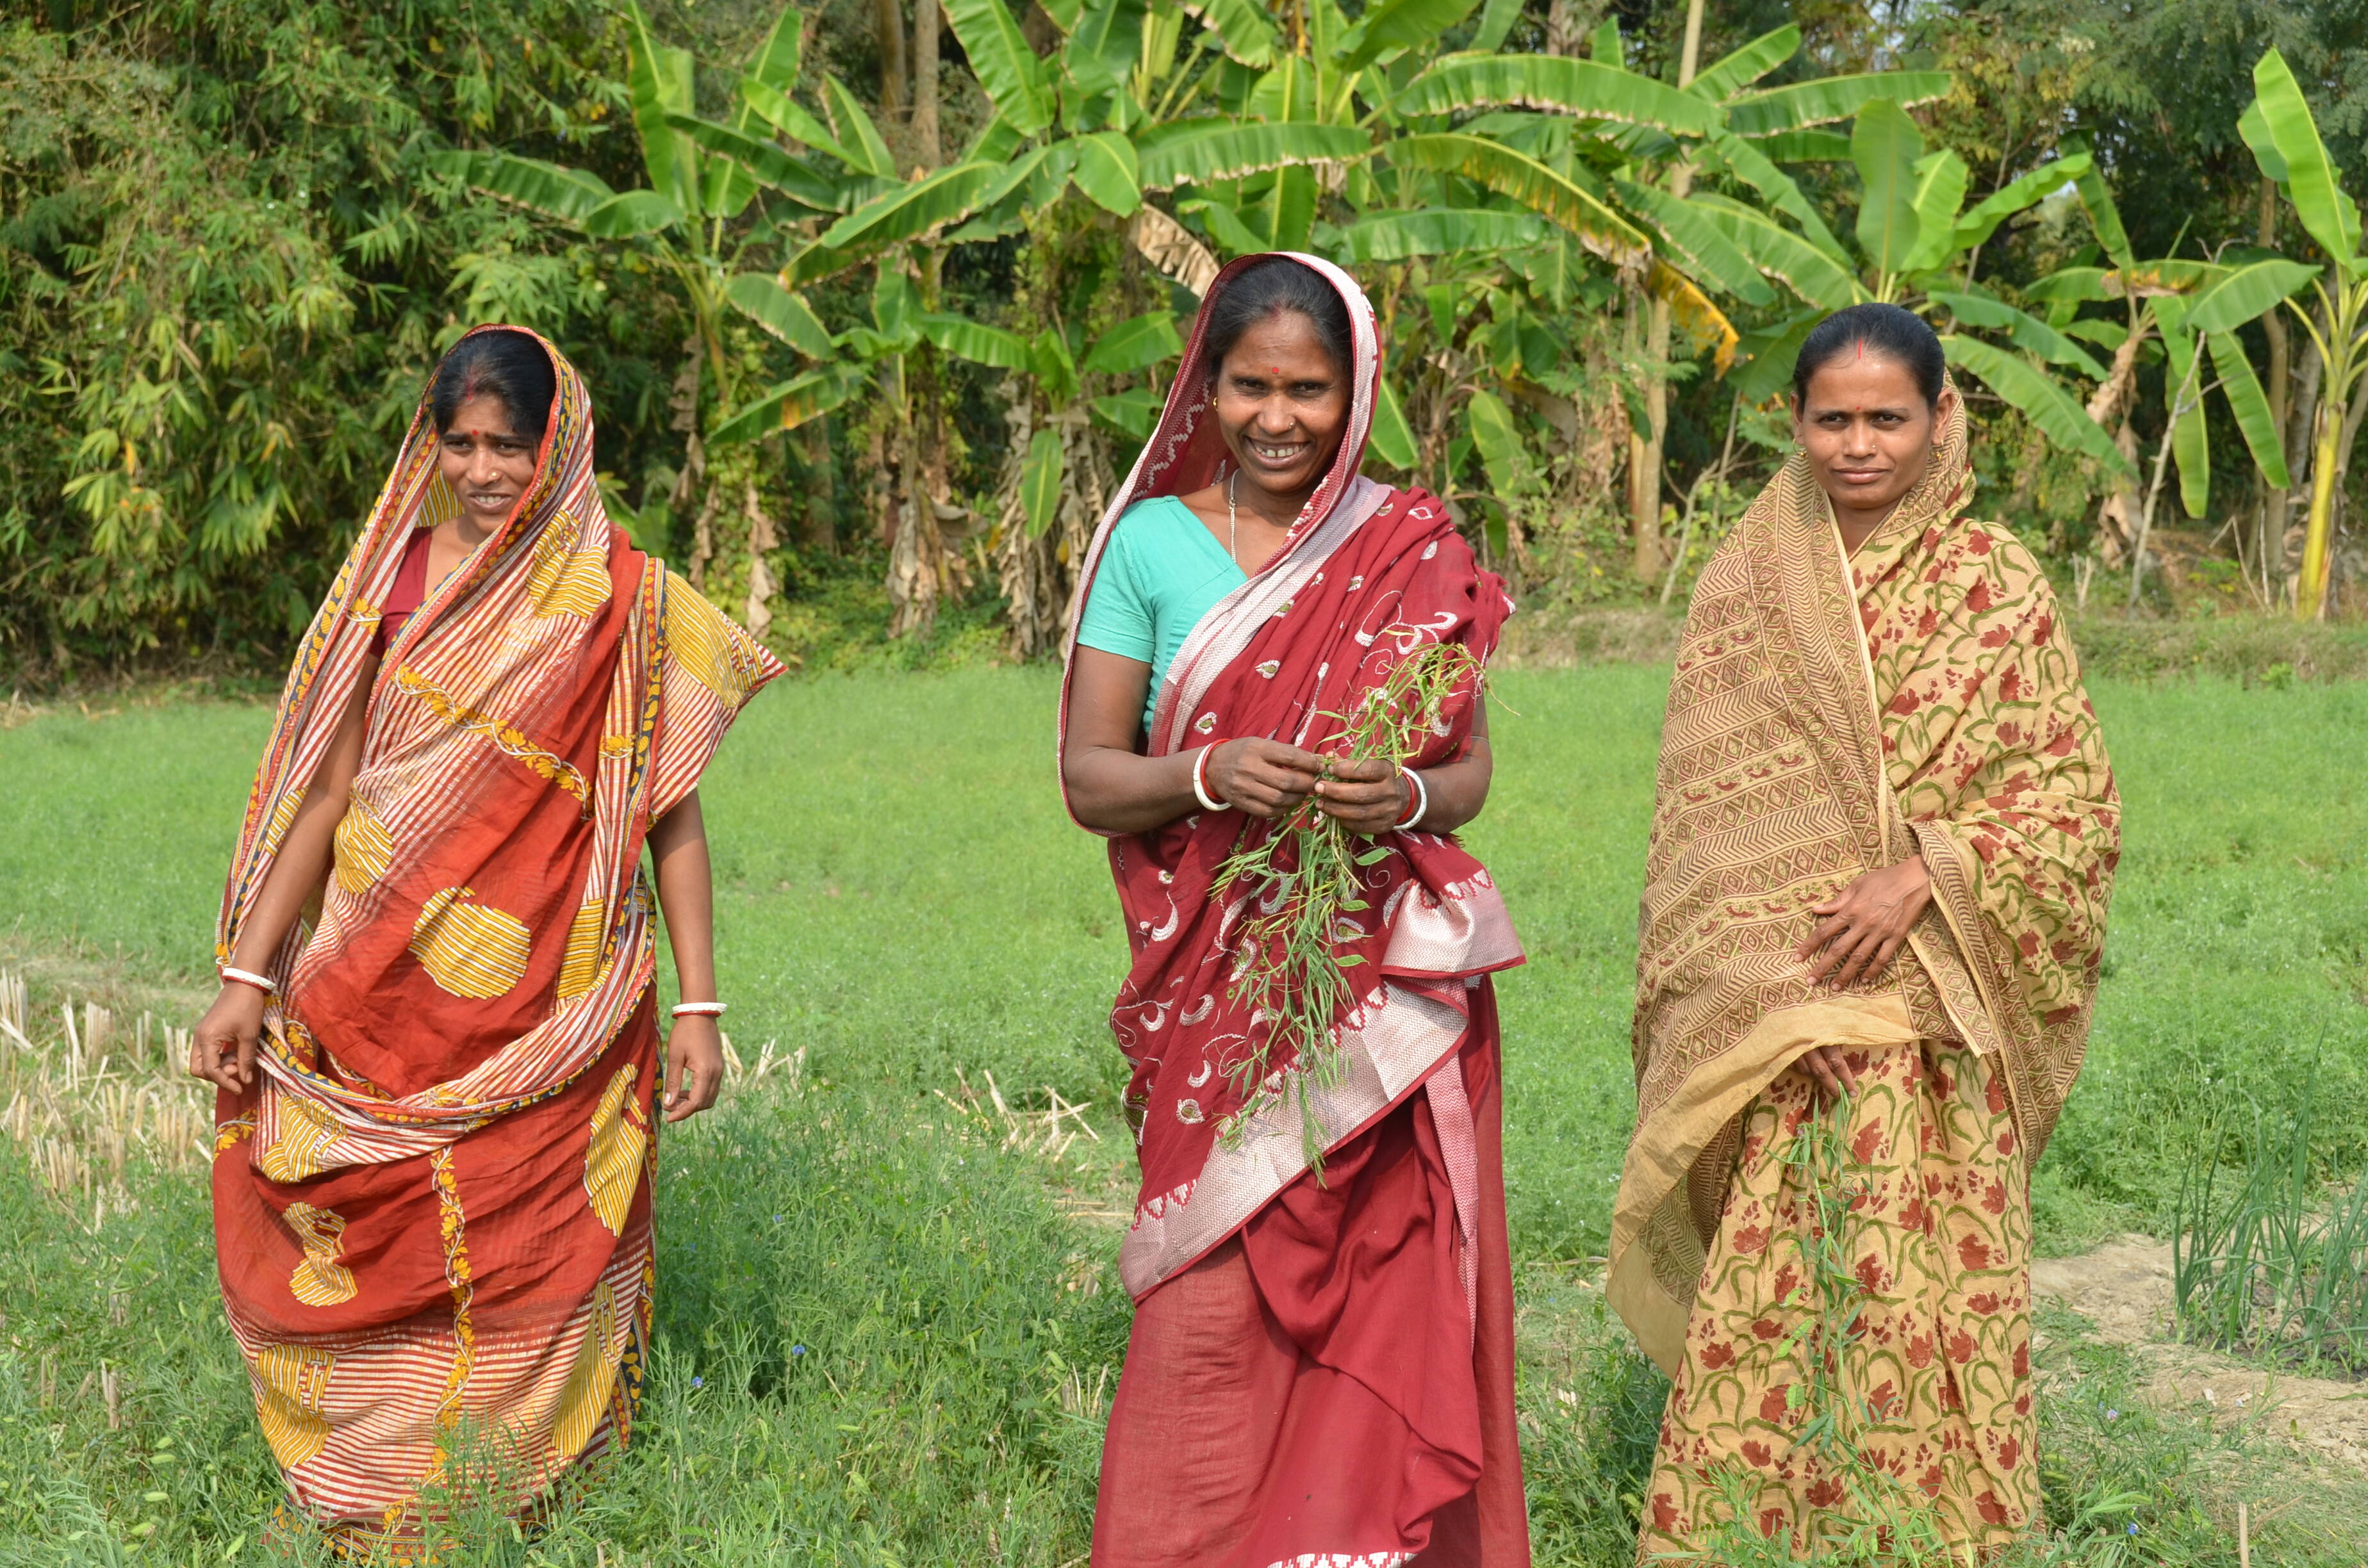 Lentil farmers in India